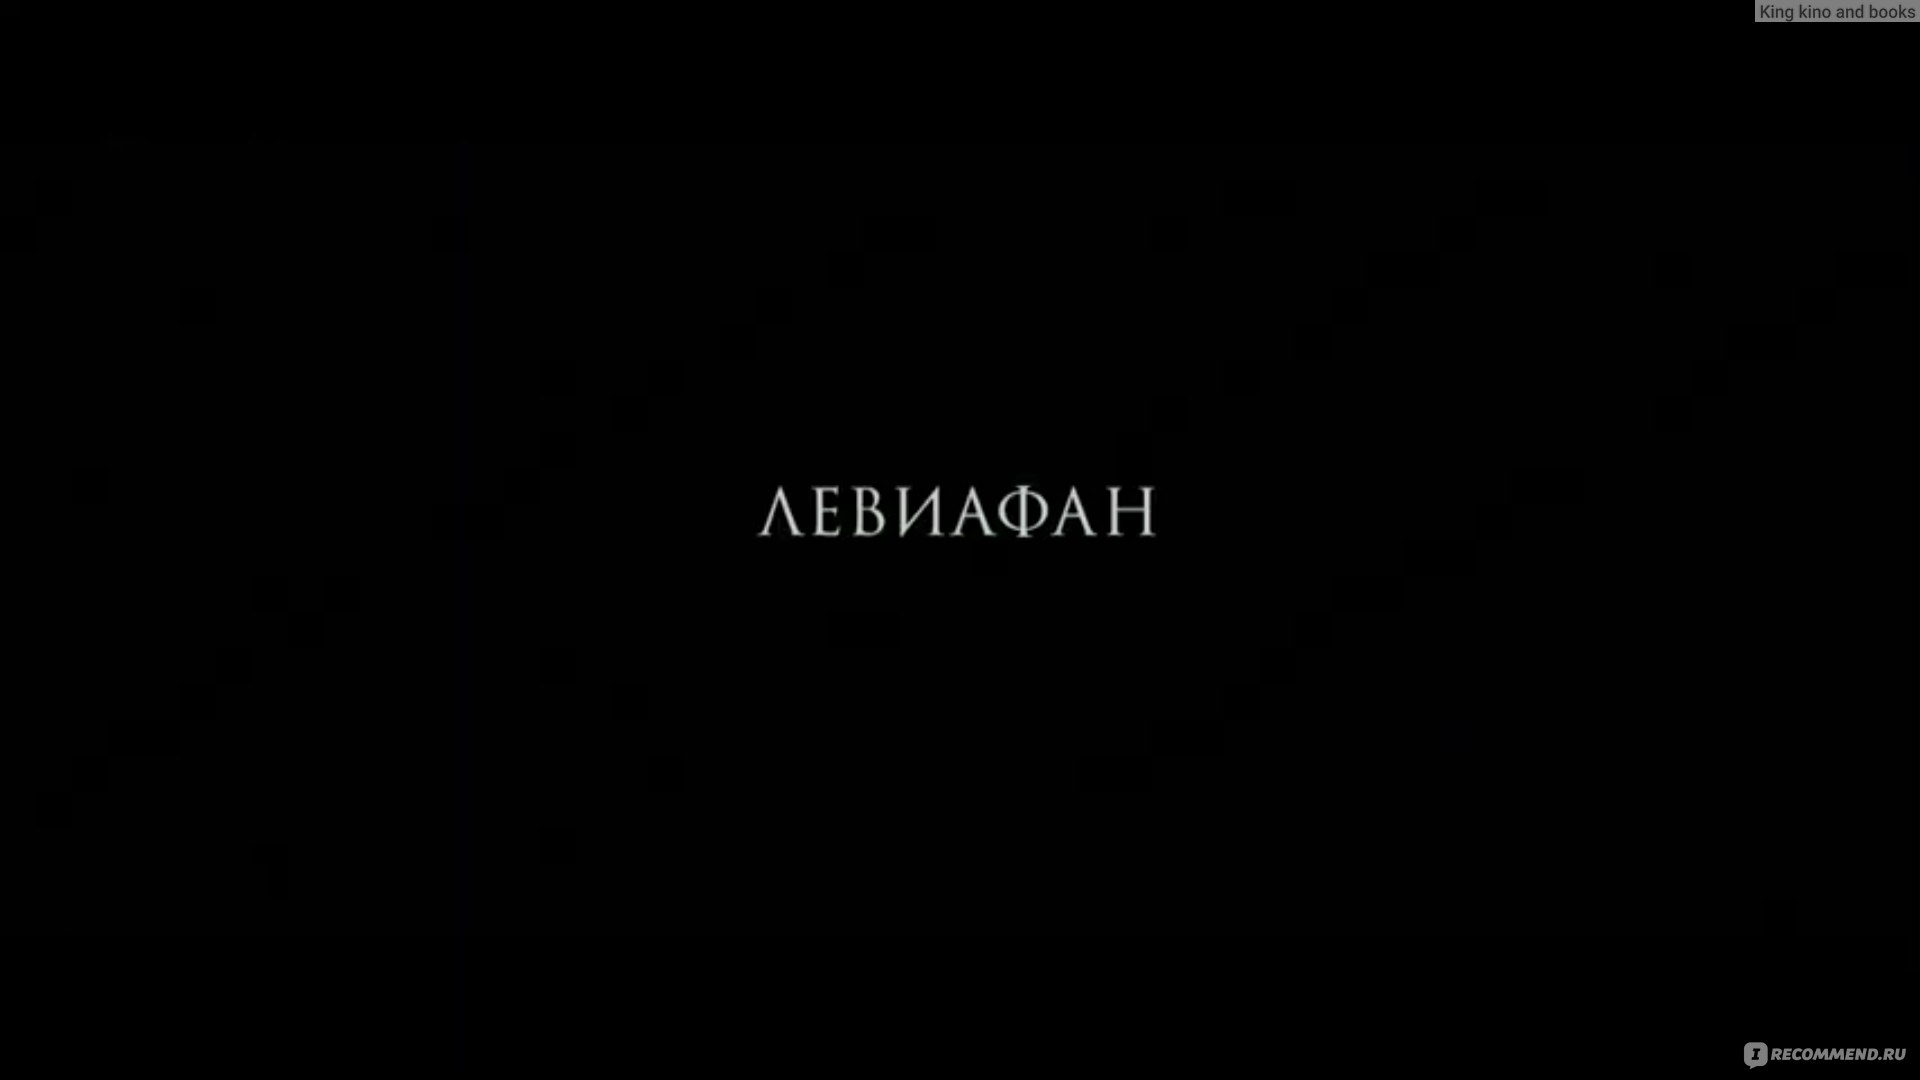 Левиафан (2014, фильм) - «Не любил никогда фильмы Звягинцева, за  исключением 